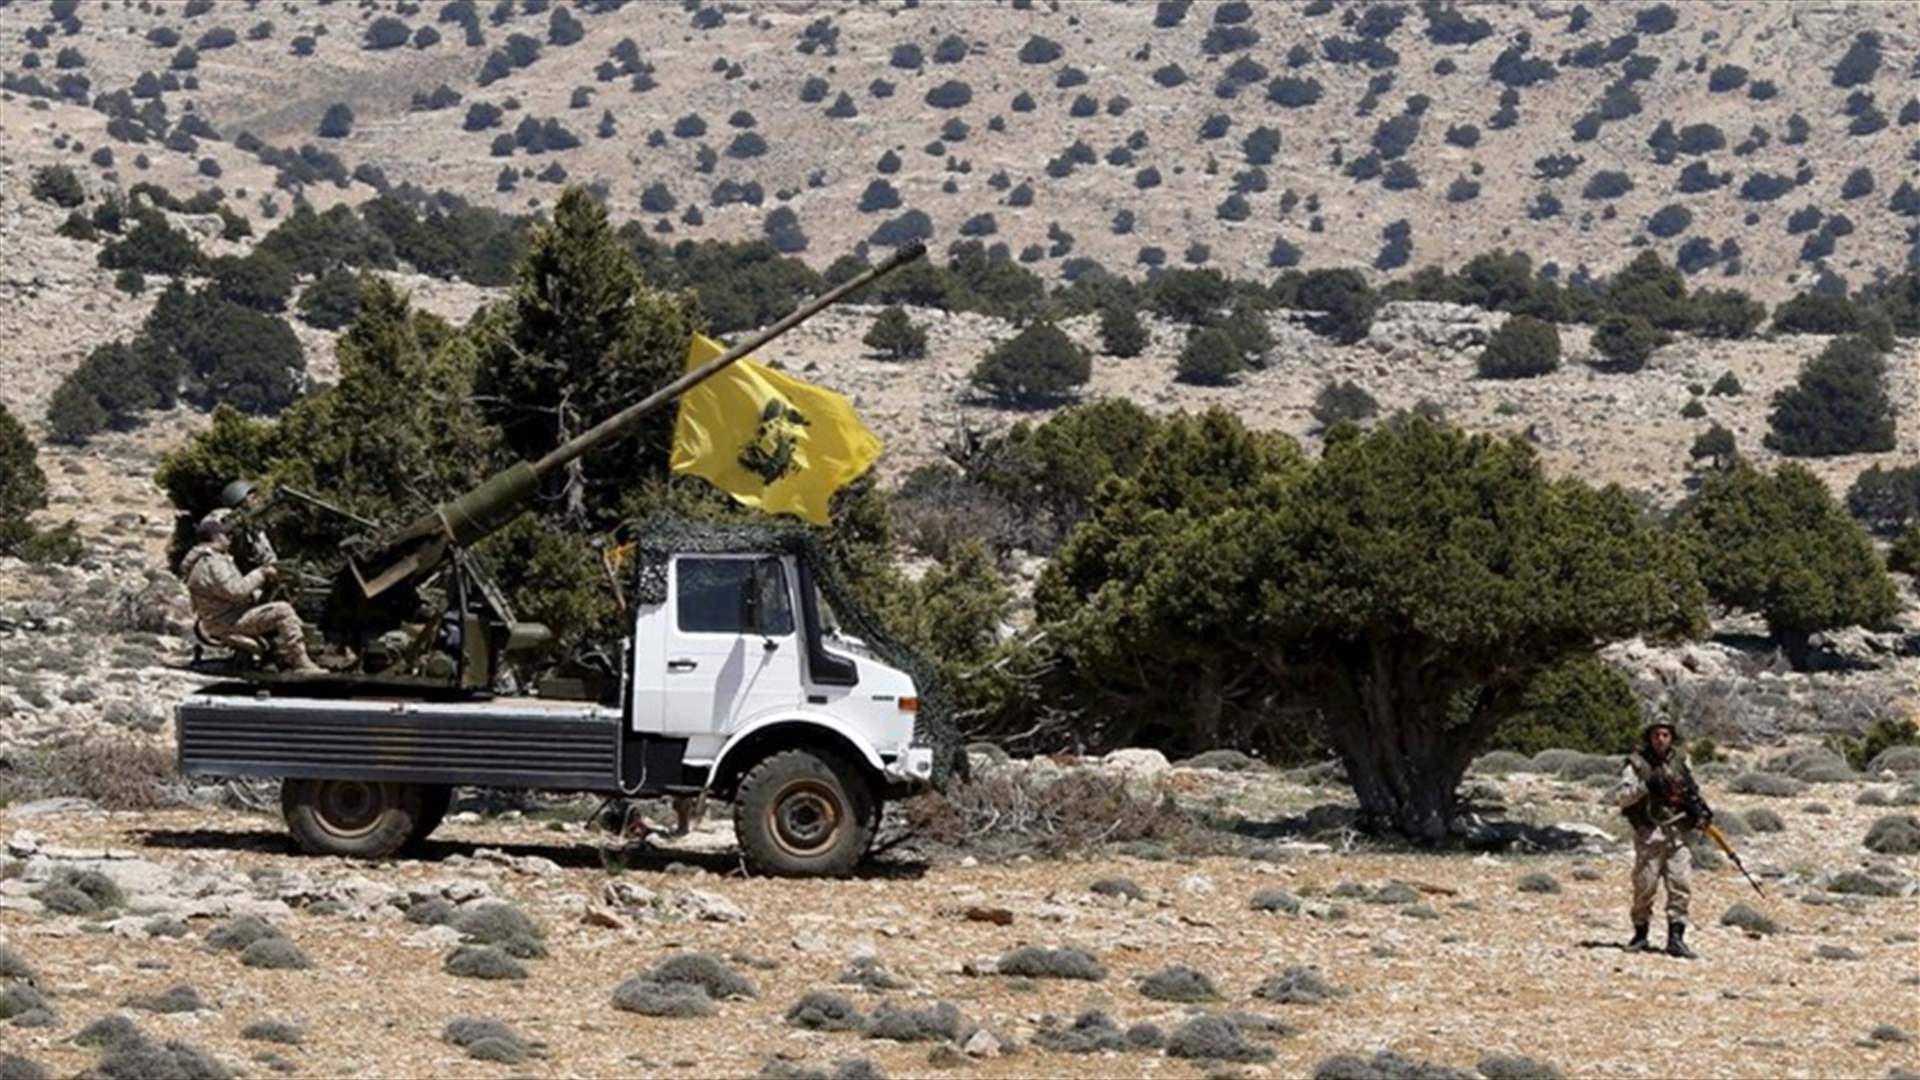 Hezbollah using US weaponry in Syria - senior Israeli military officer